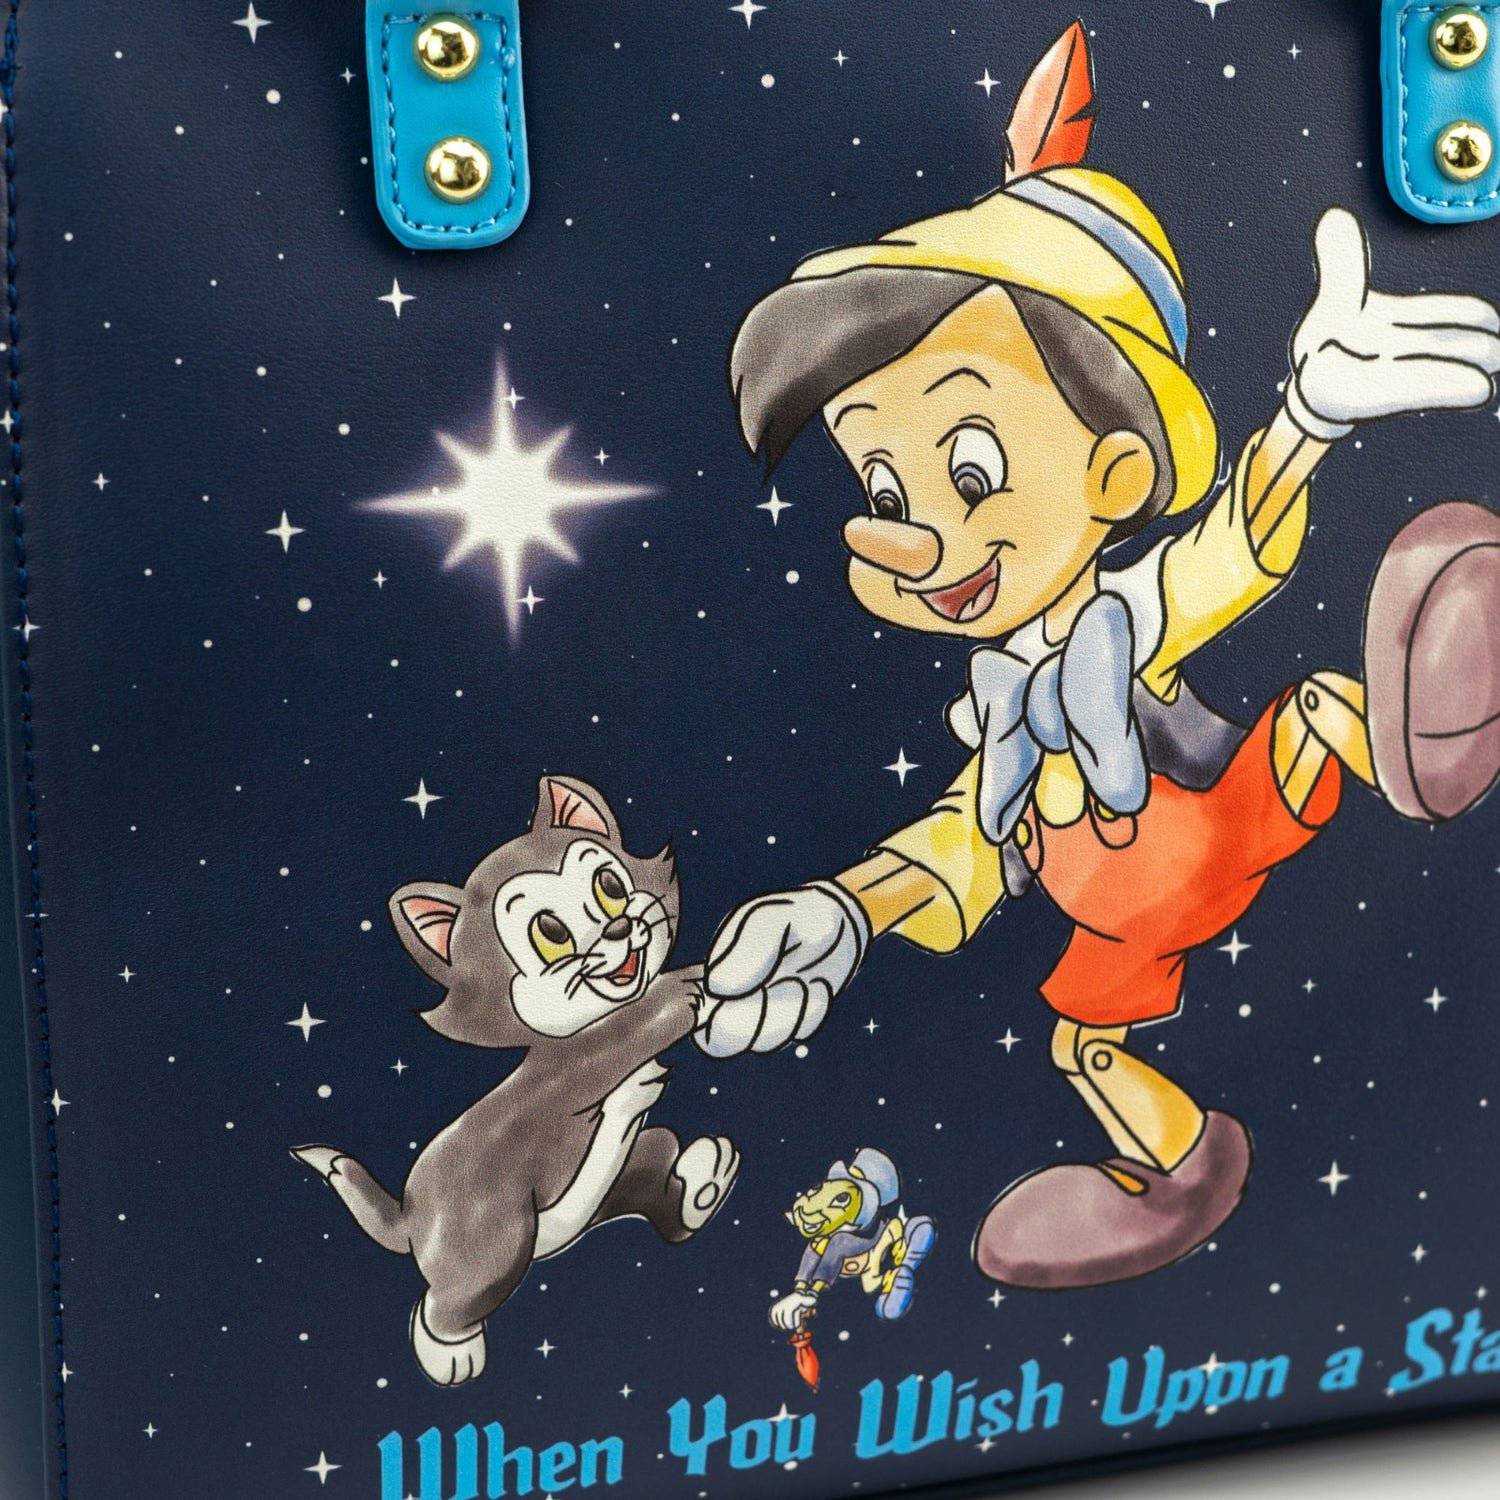 Pinocchio Wish Upon a Star